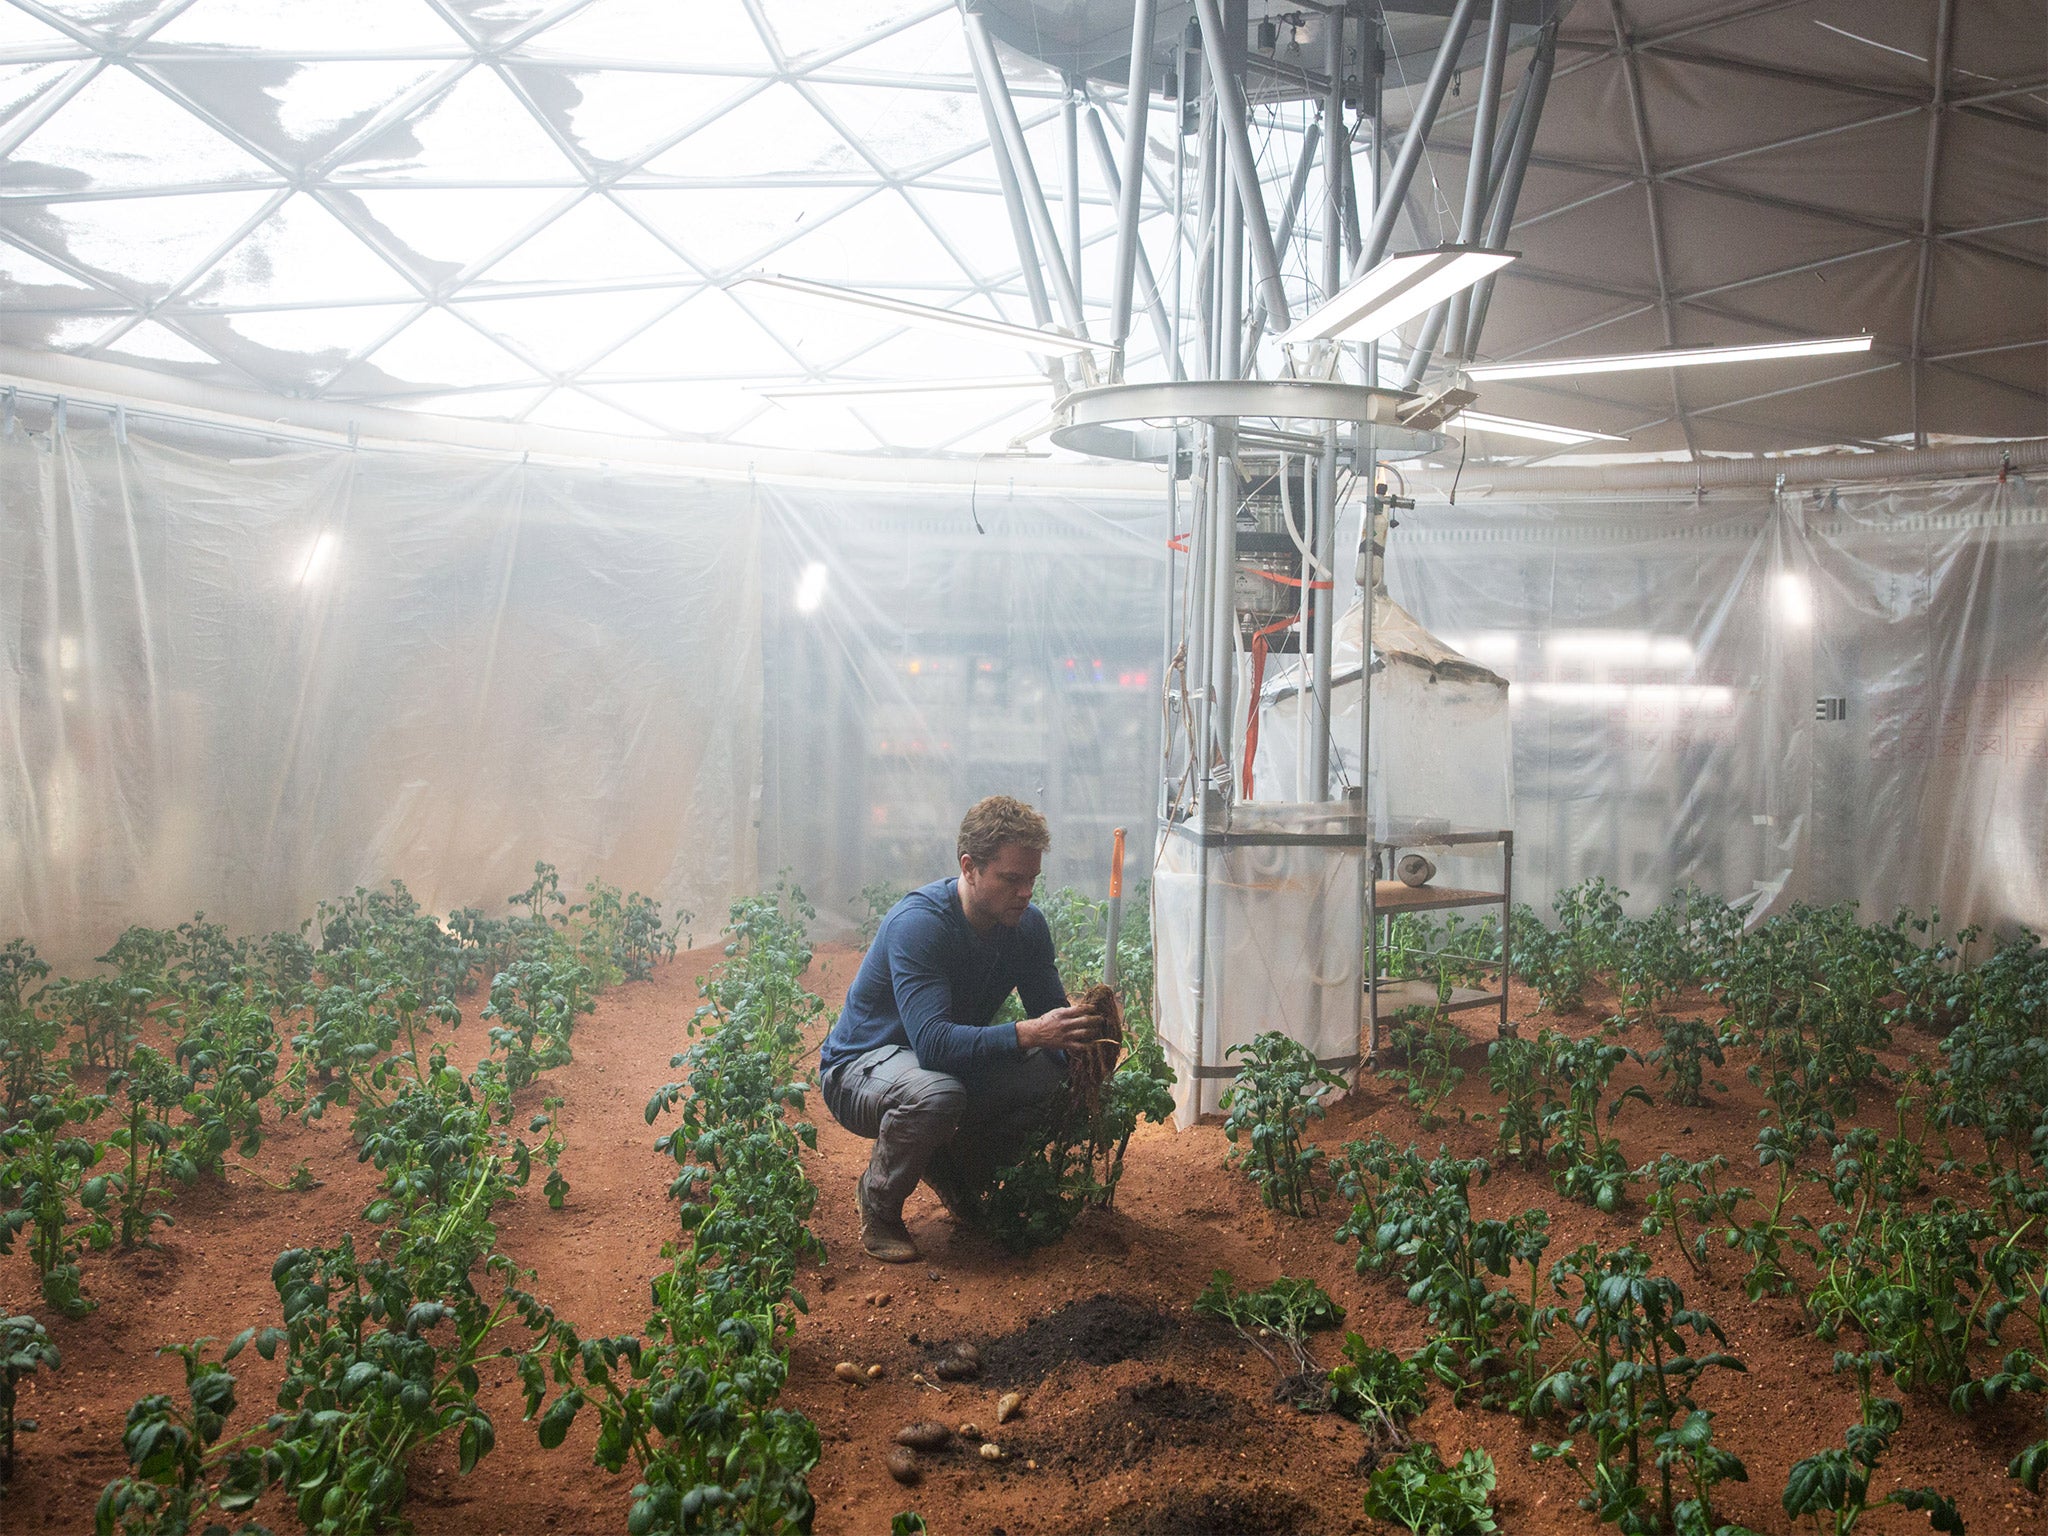 Matt Damon cultivating potatoes in 'The Martian'